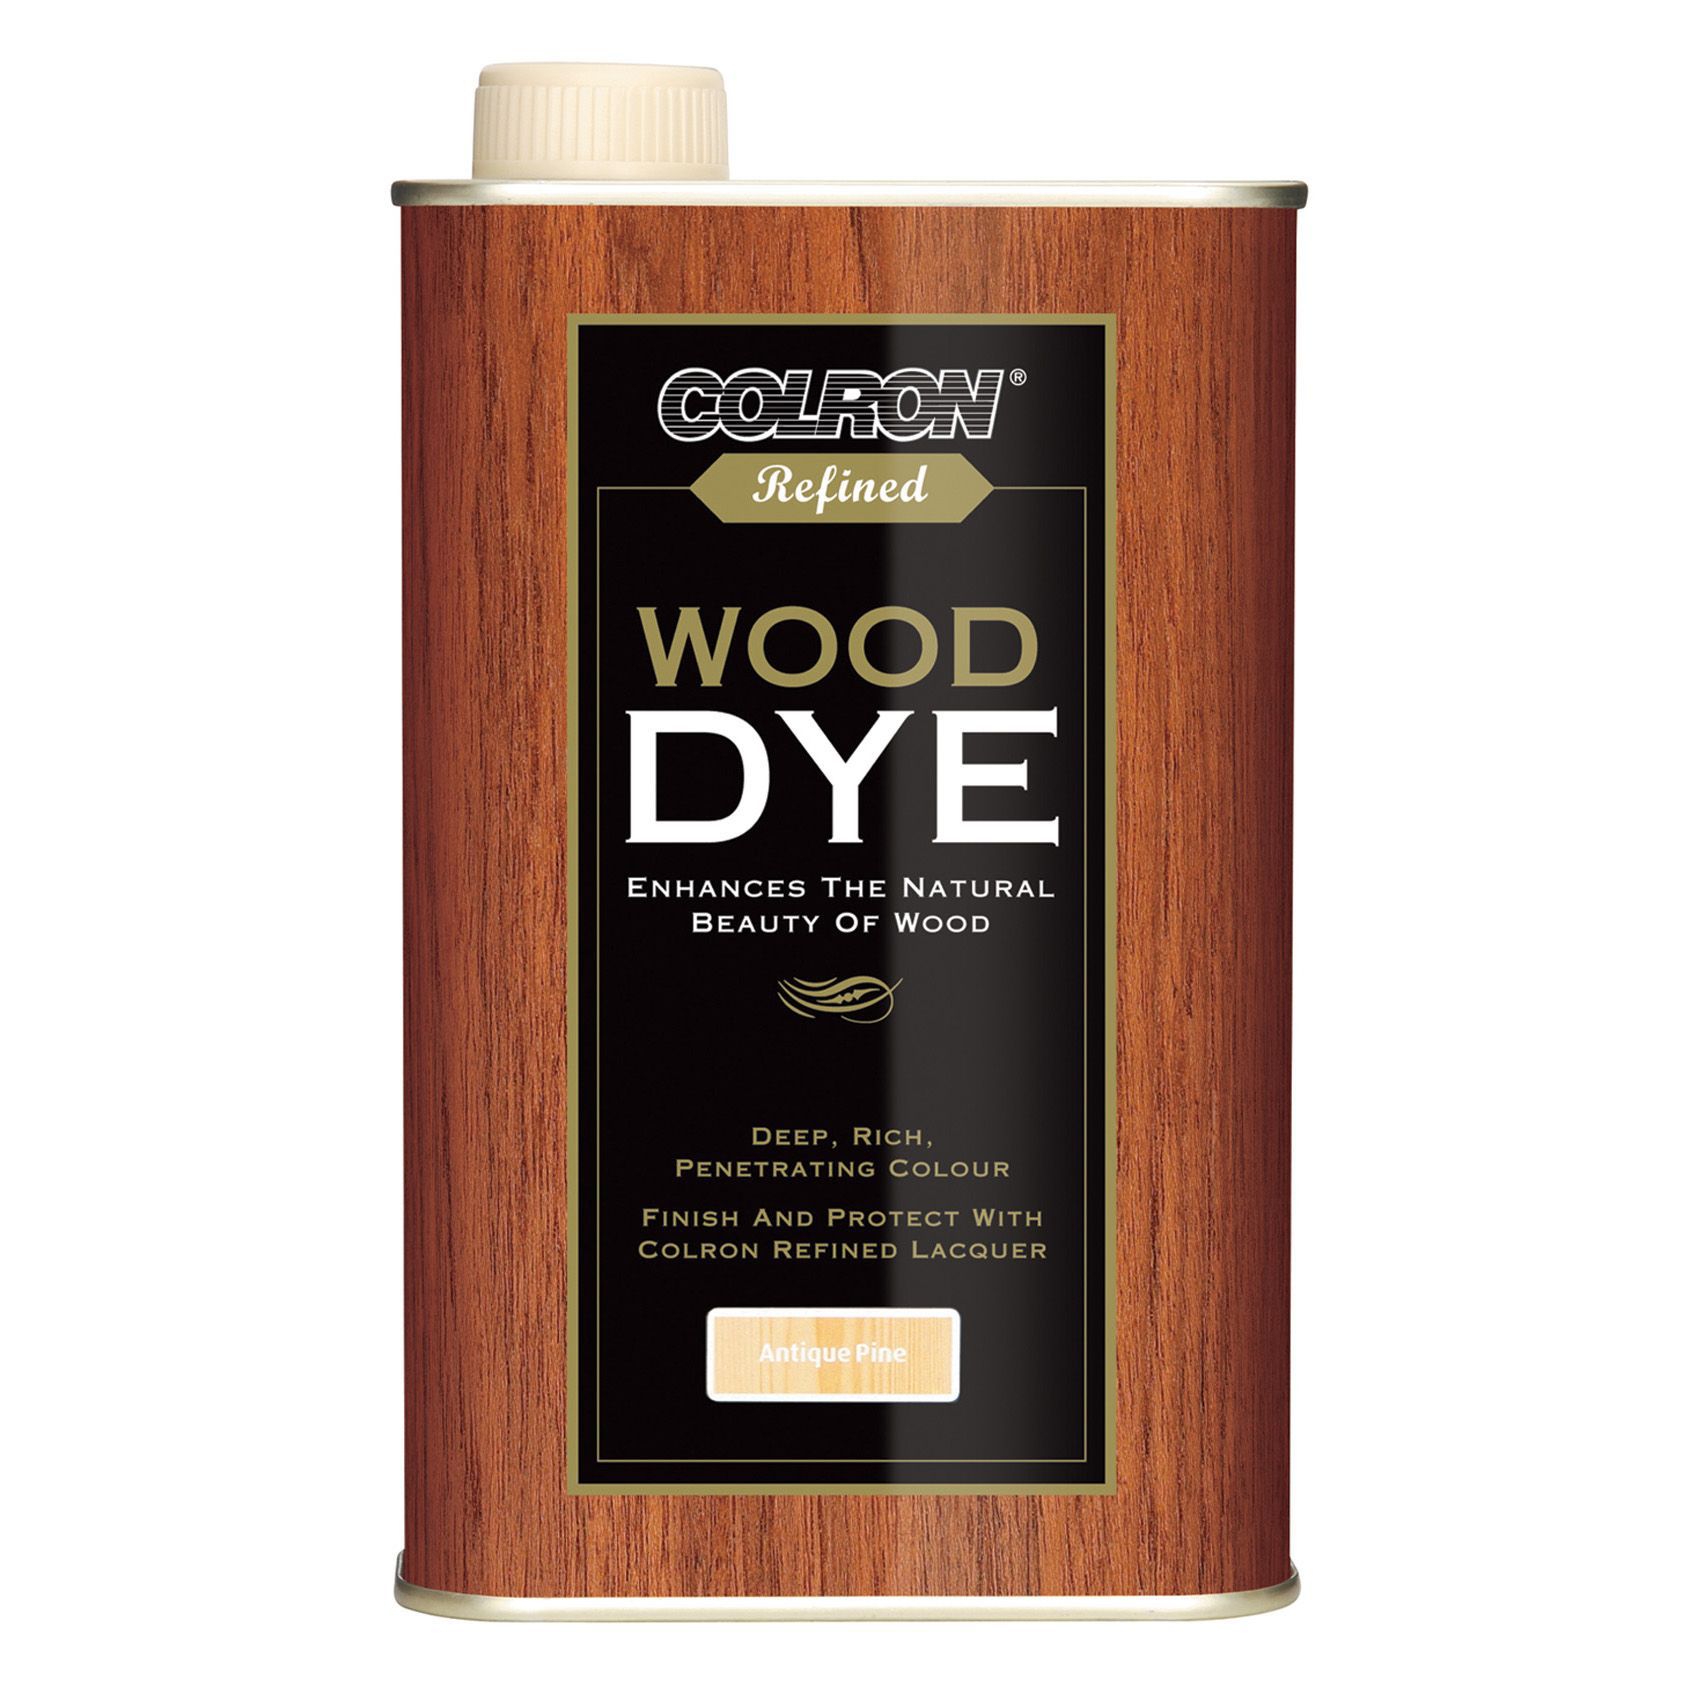 Colron Refined Antique pine Wood dye, 250ml